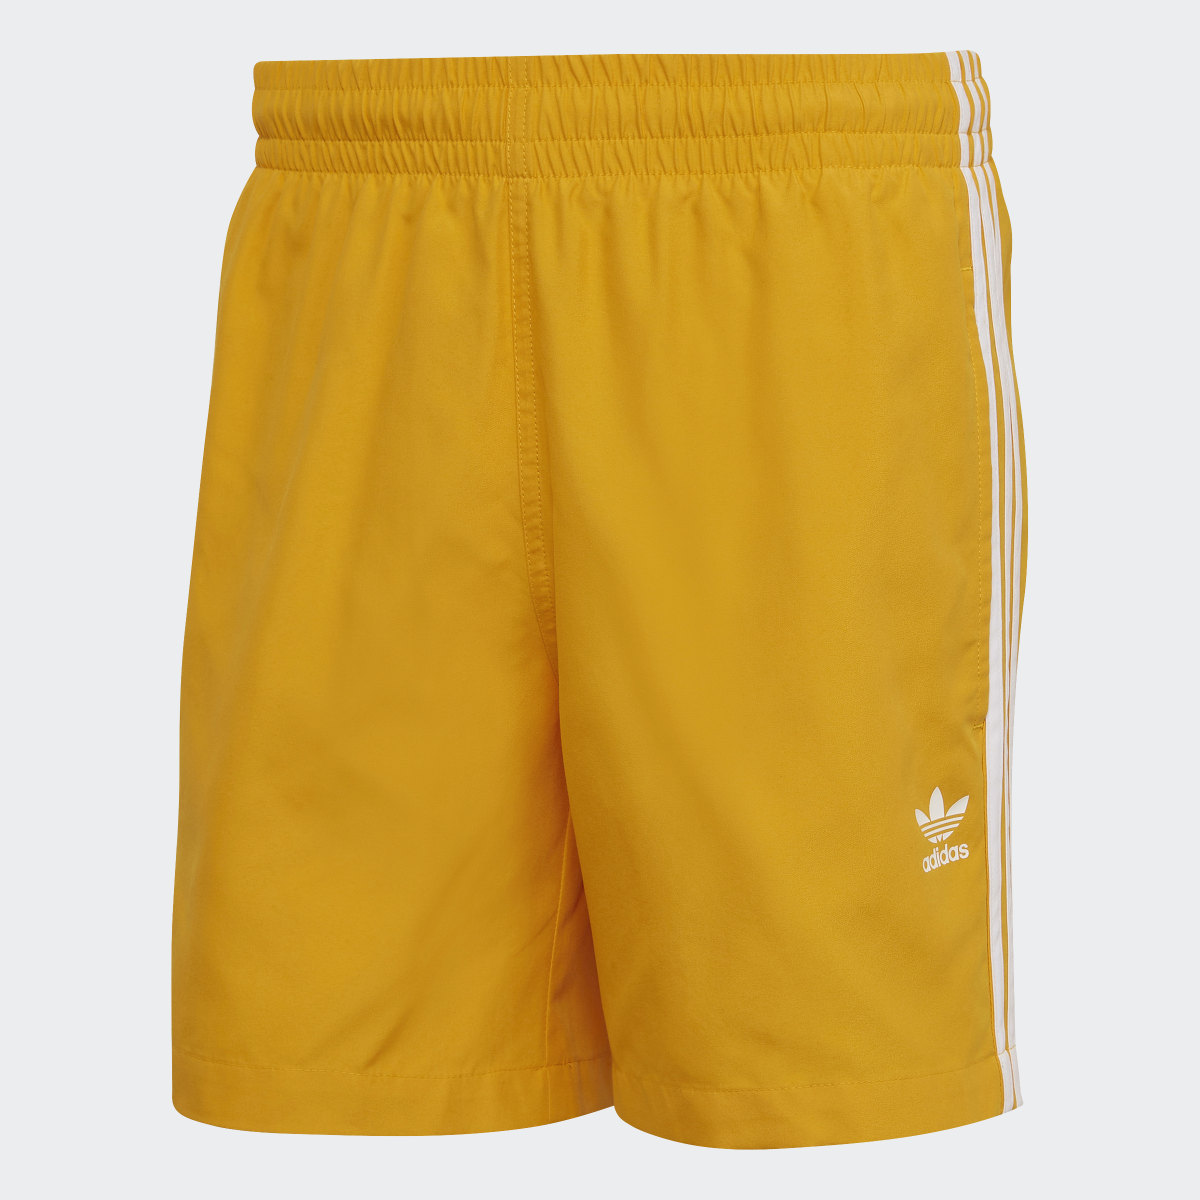 Adidas Adicolor Classics 3-Stripes Swim Shorts. 4